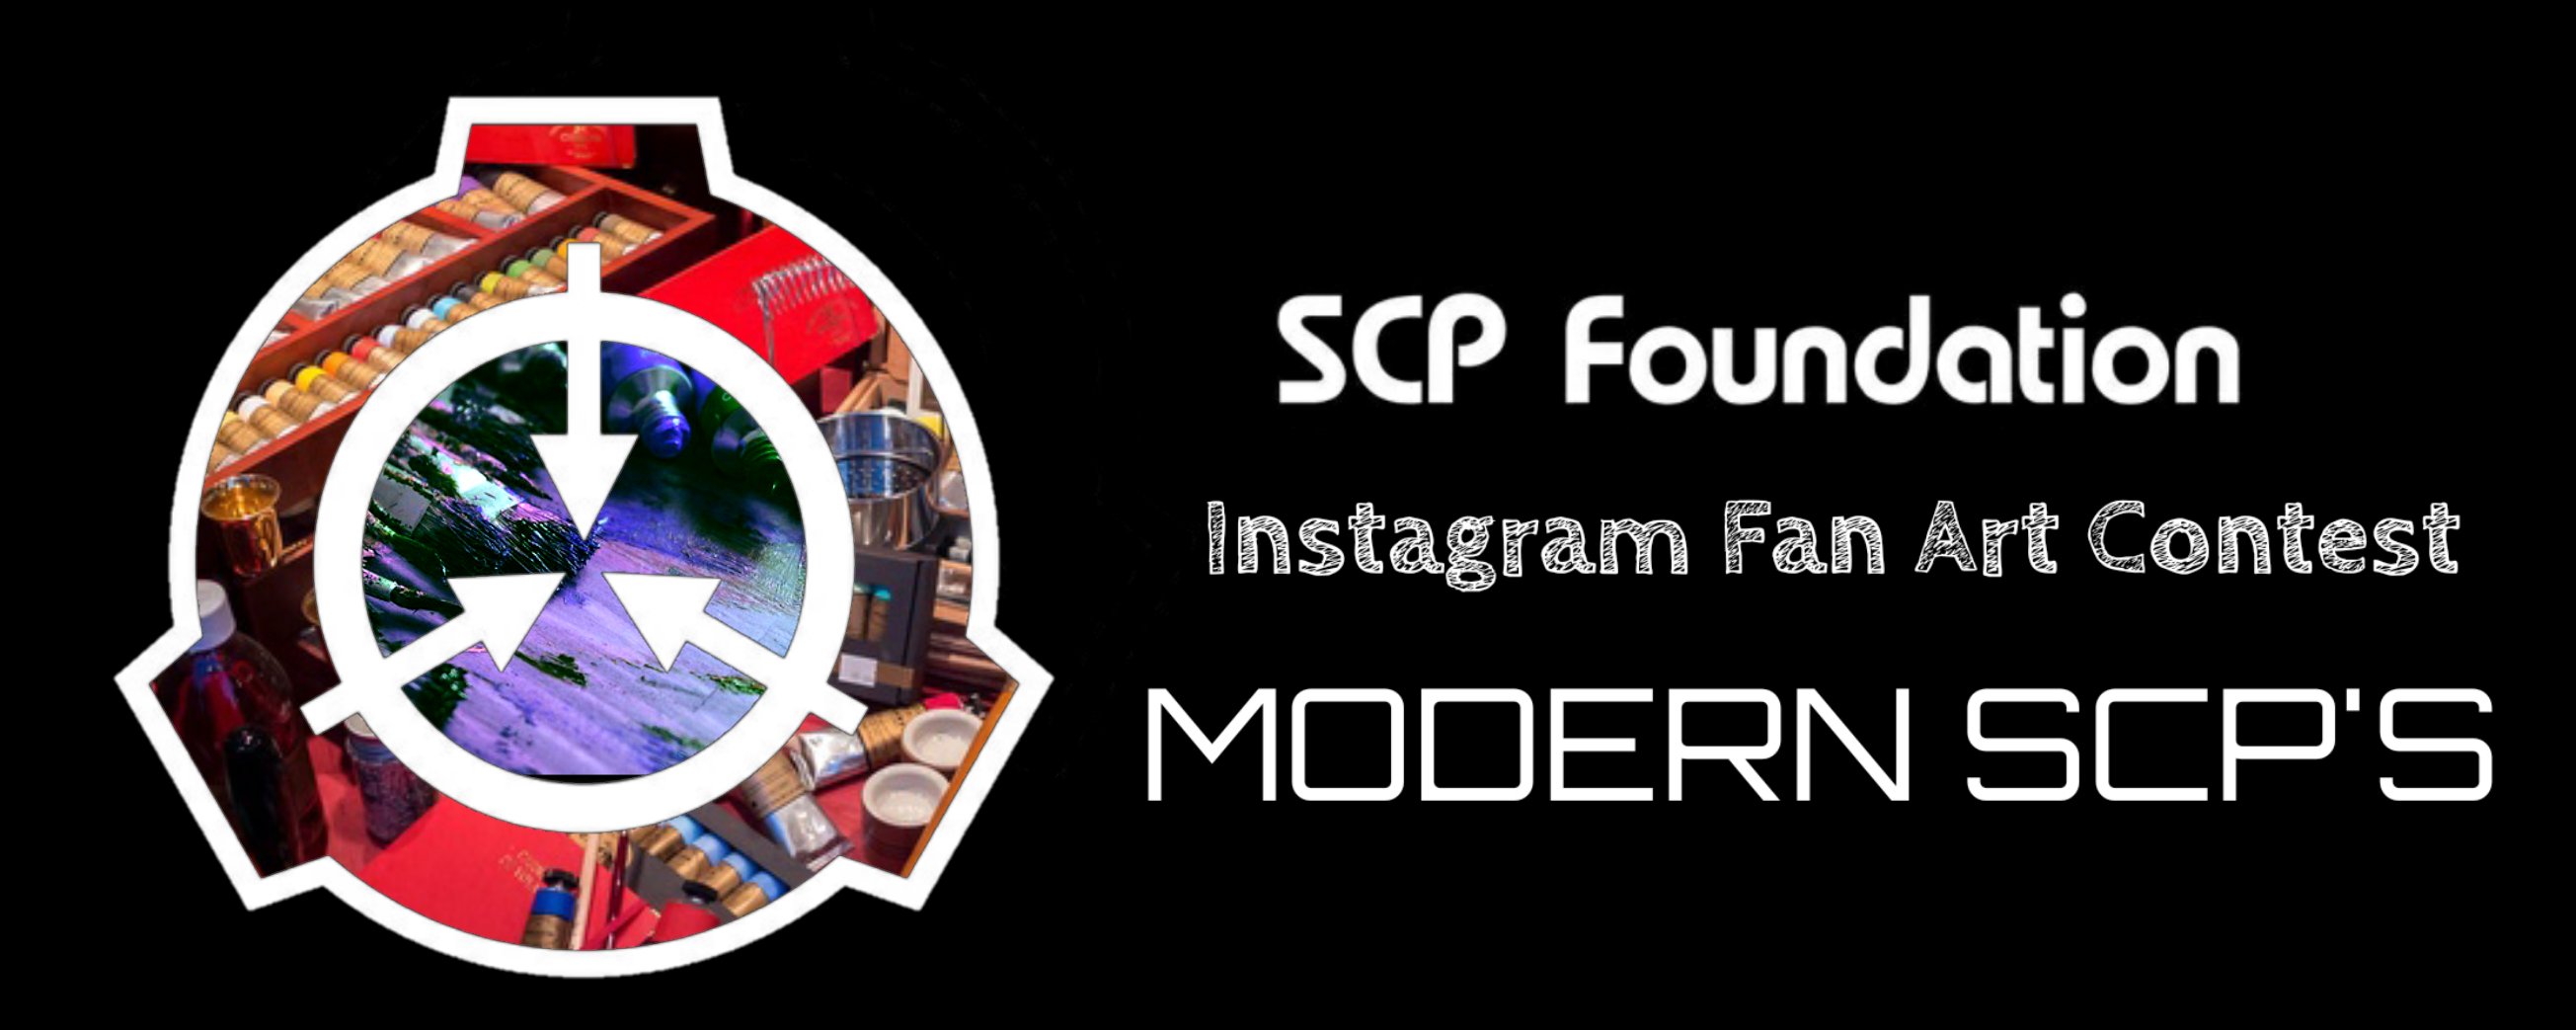 SCP Foundation Logo by Cadethen on DeviantArt